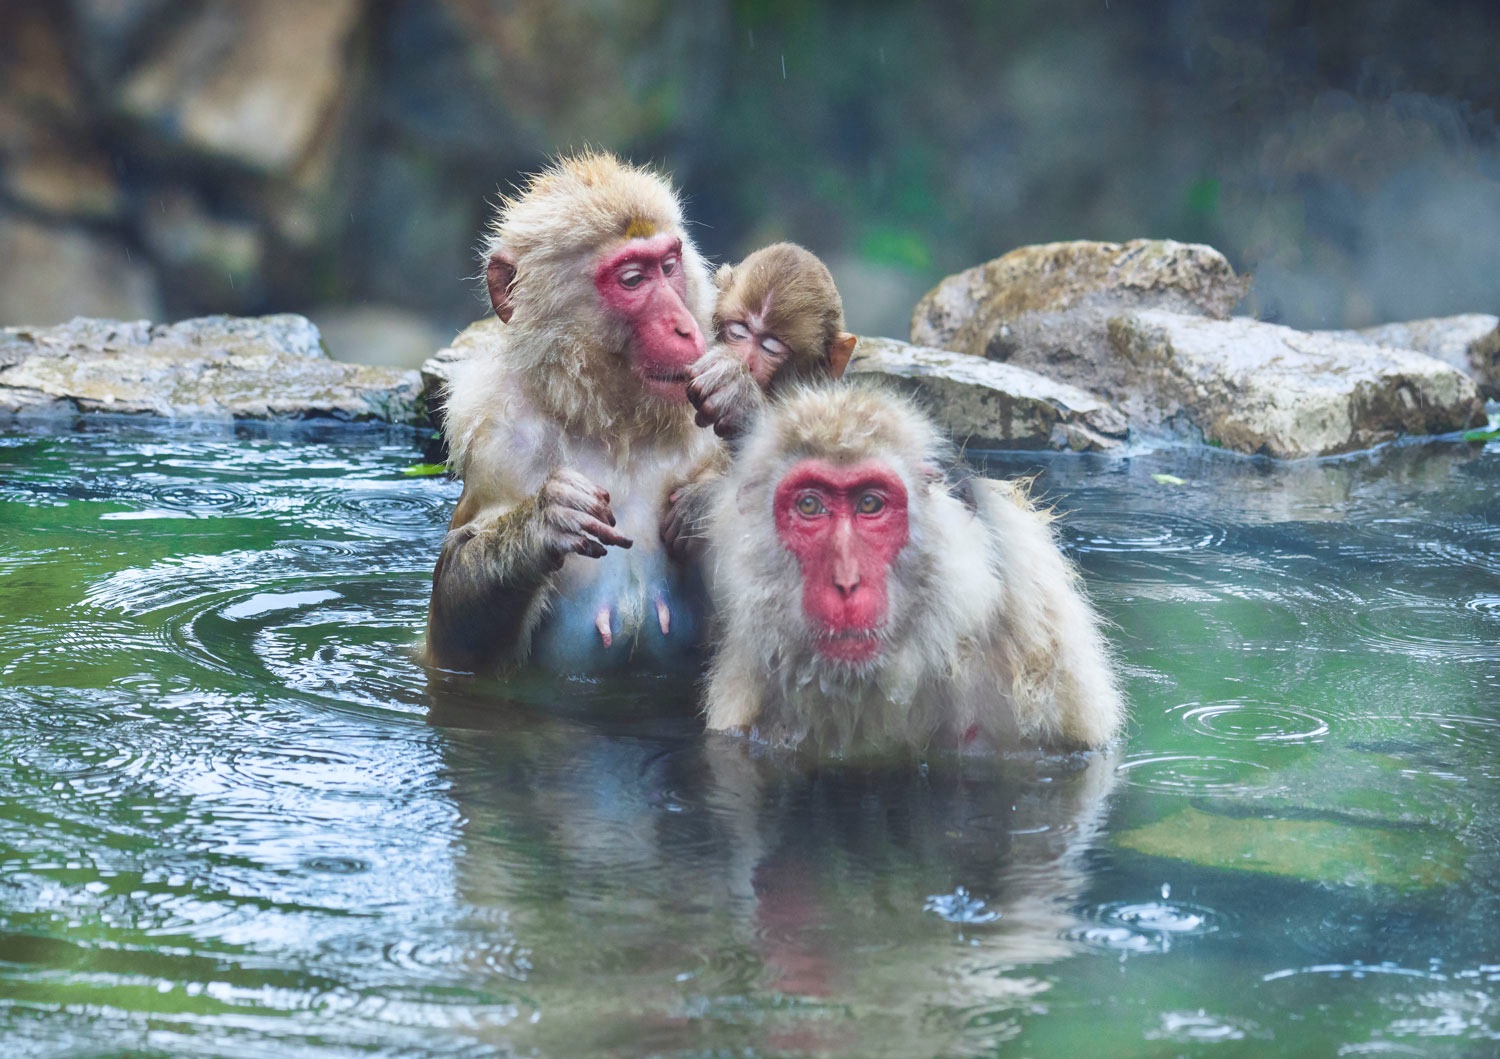 Snow Monkeys Japan Photo Tour Blain Harasymiw Photography